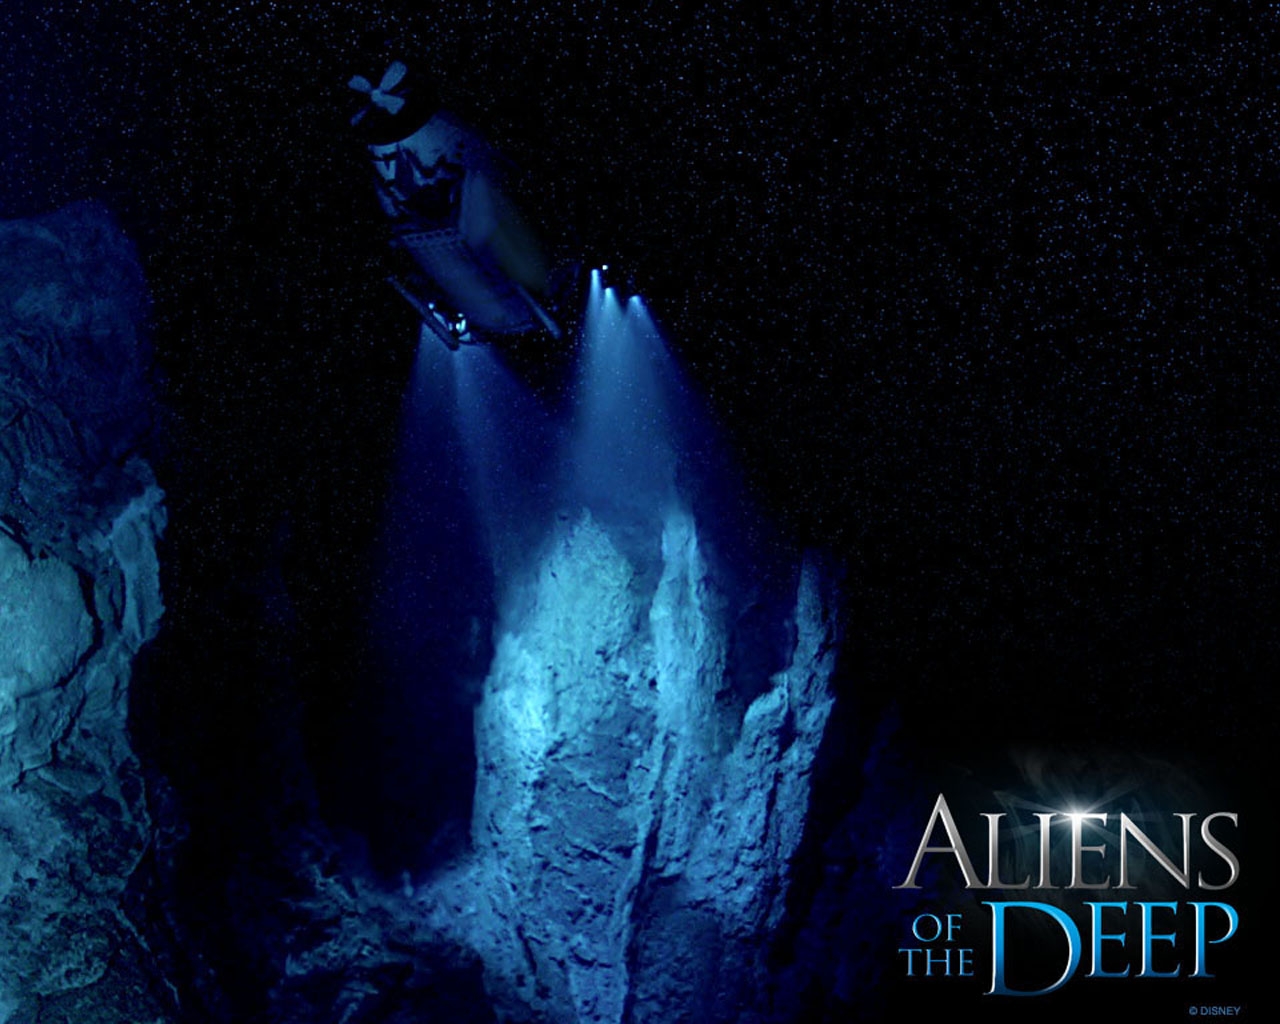 Aliens of the Deep